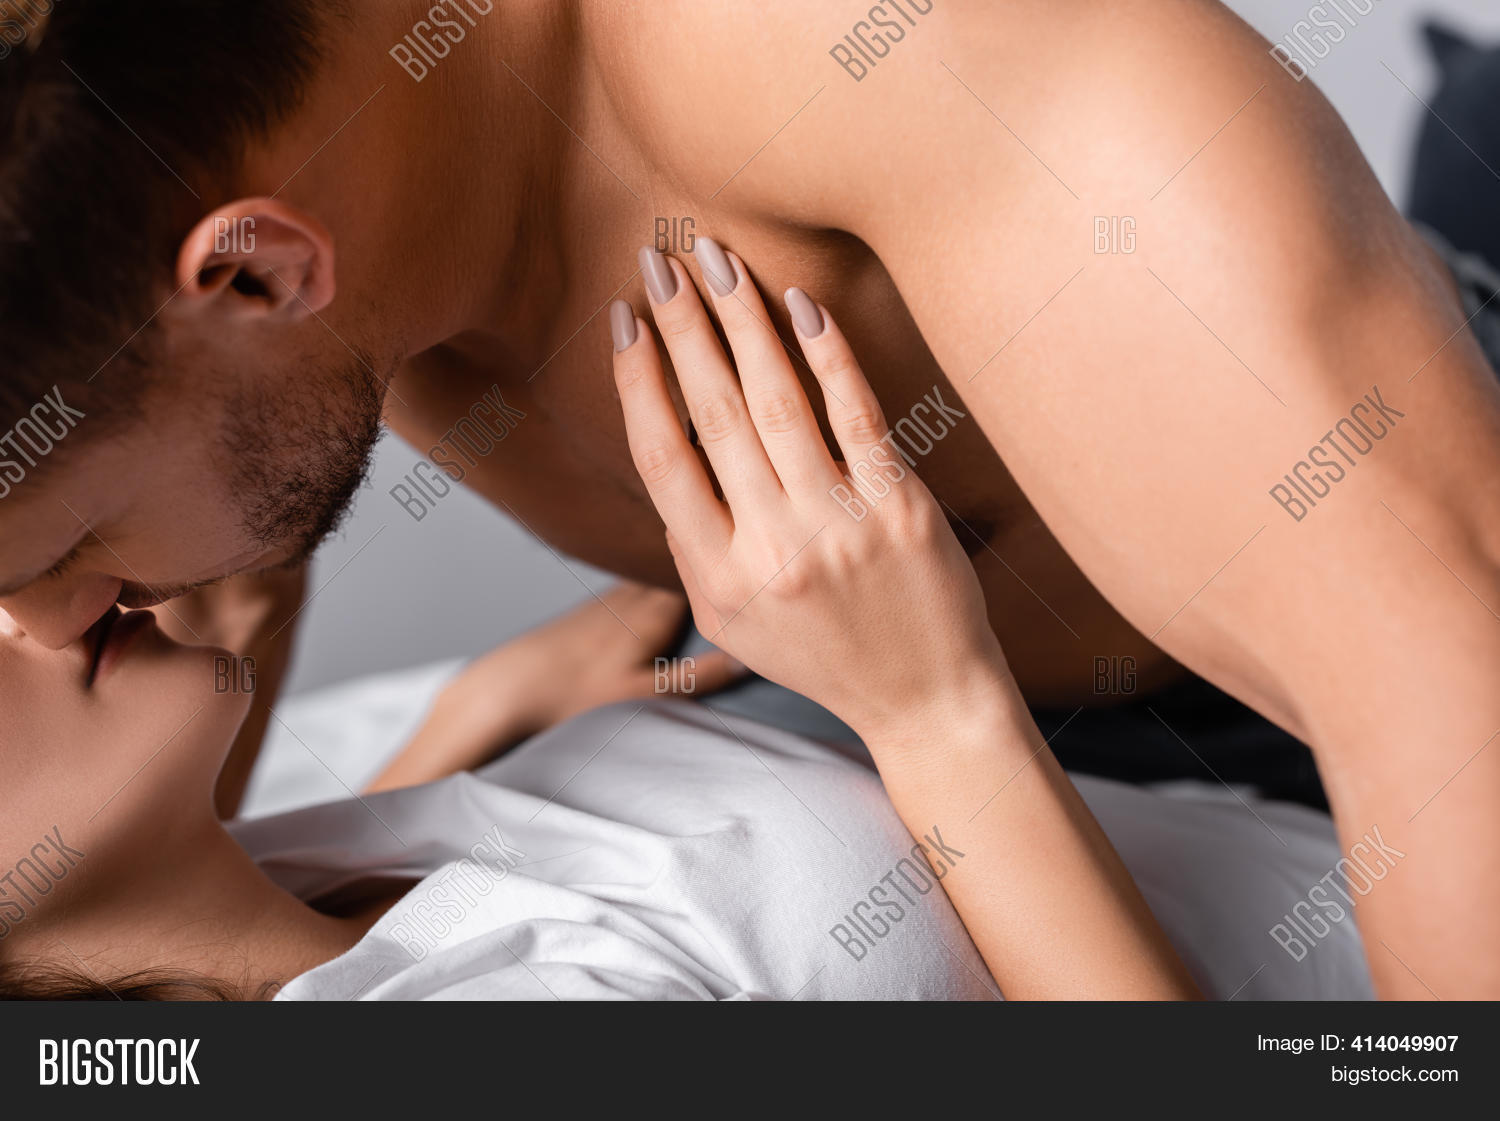 chris bettle add men kissing hot photo